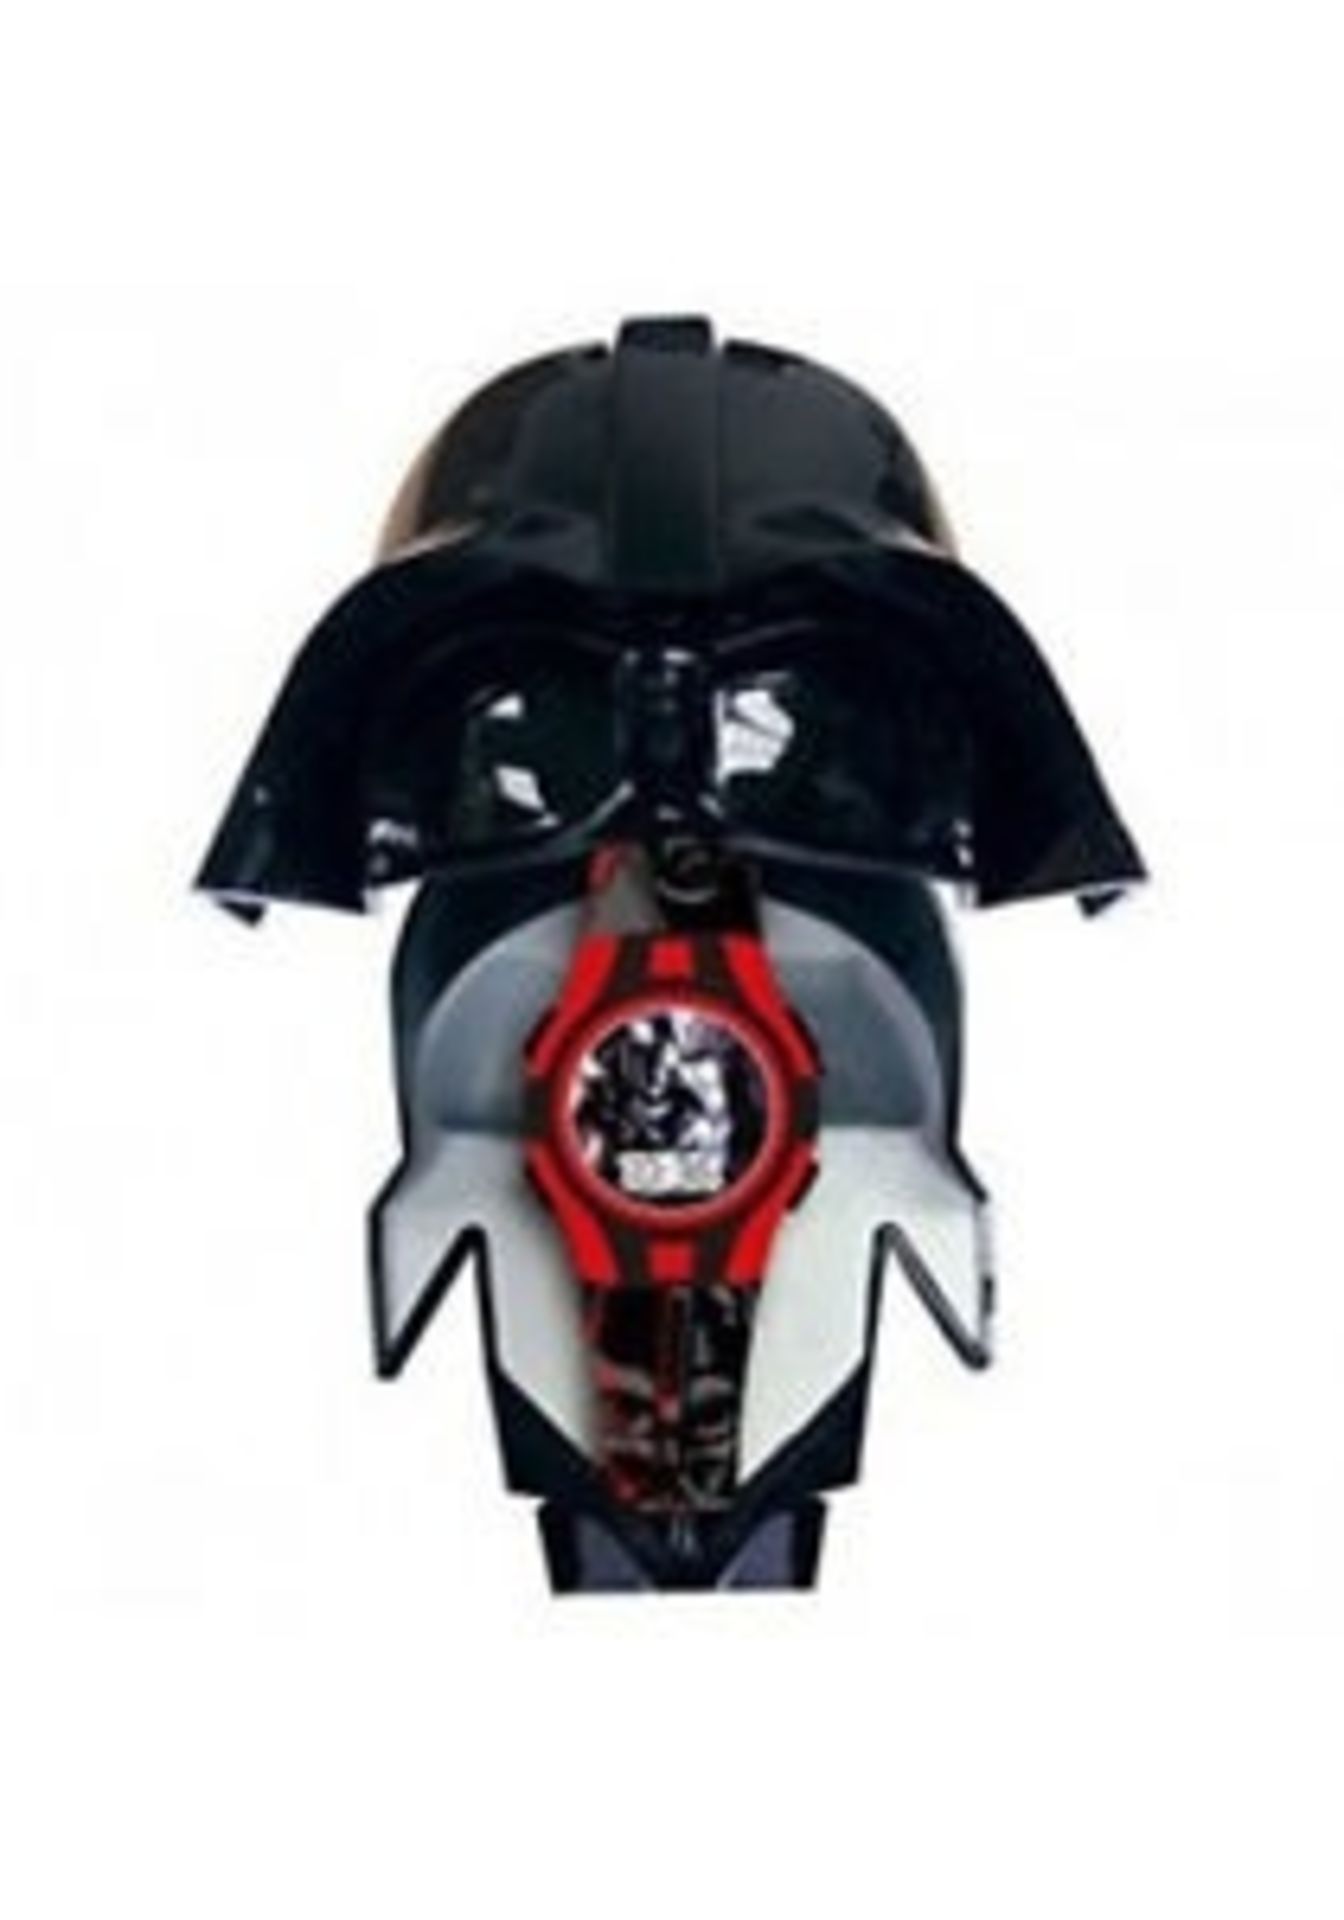 V Brand New Star Wars Darth Vader Watch In 3D Case eBay Price £42.63 - Image 3 of 3